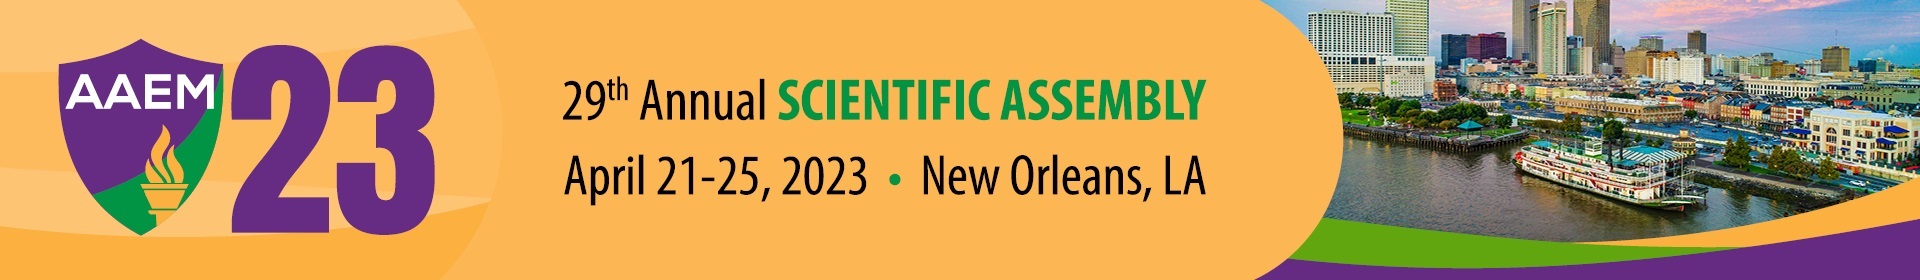 2023 AAEM Scientific Assembly Event Banner